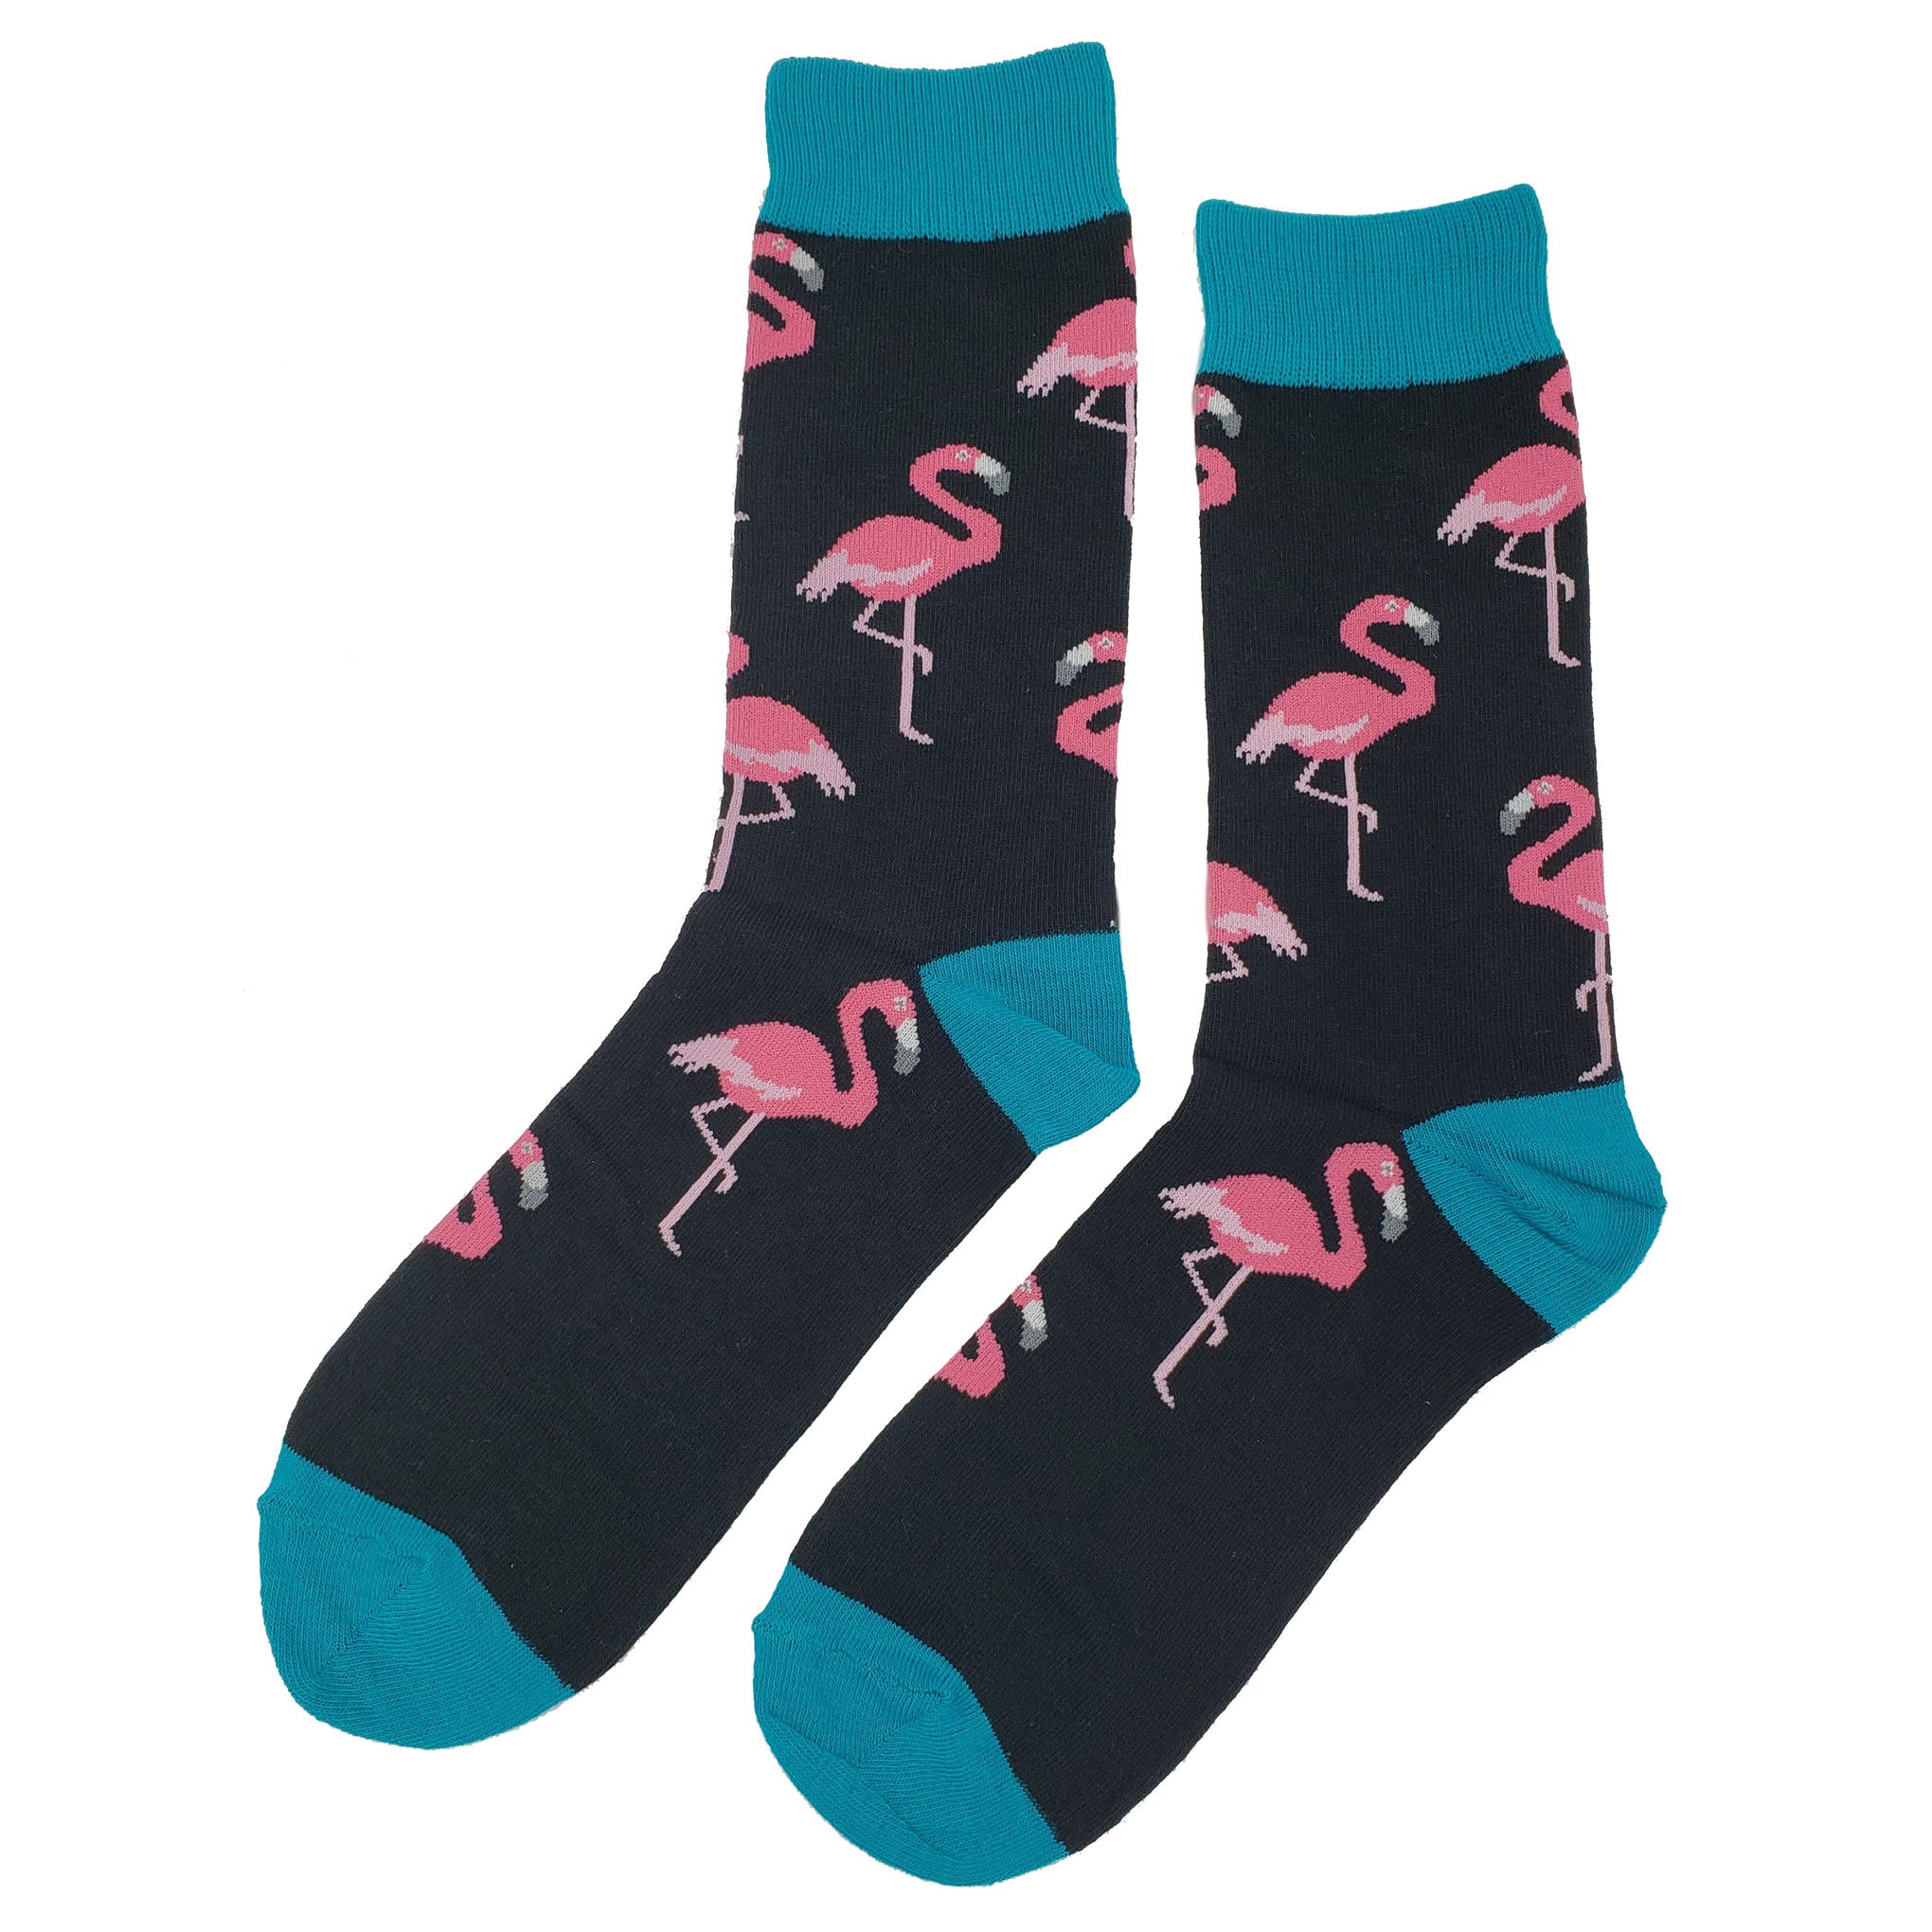 Pink Flamingo Socks - Fun and Crazy Socks at Sockfly.com